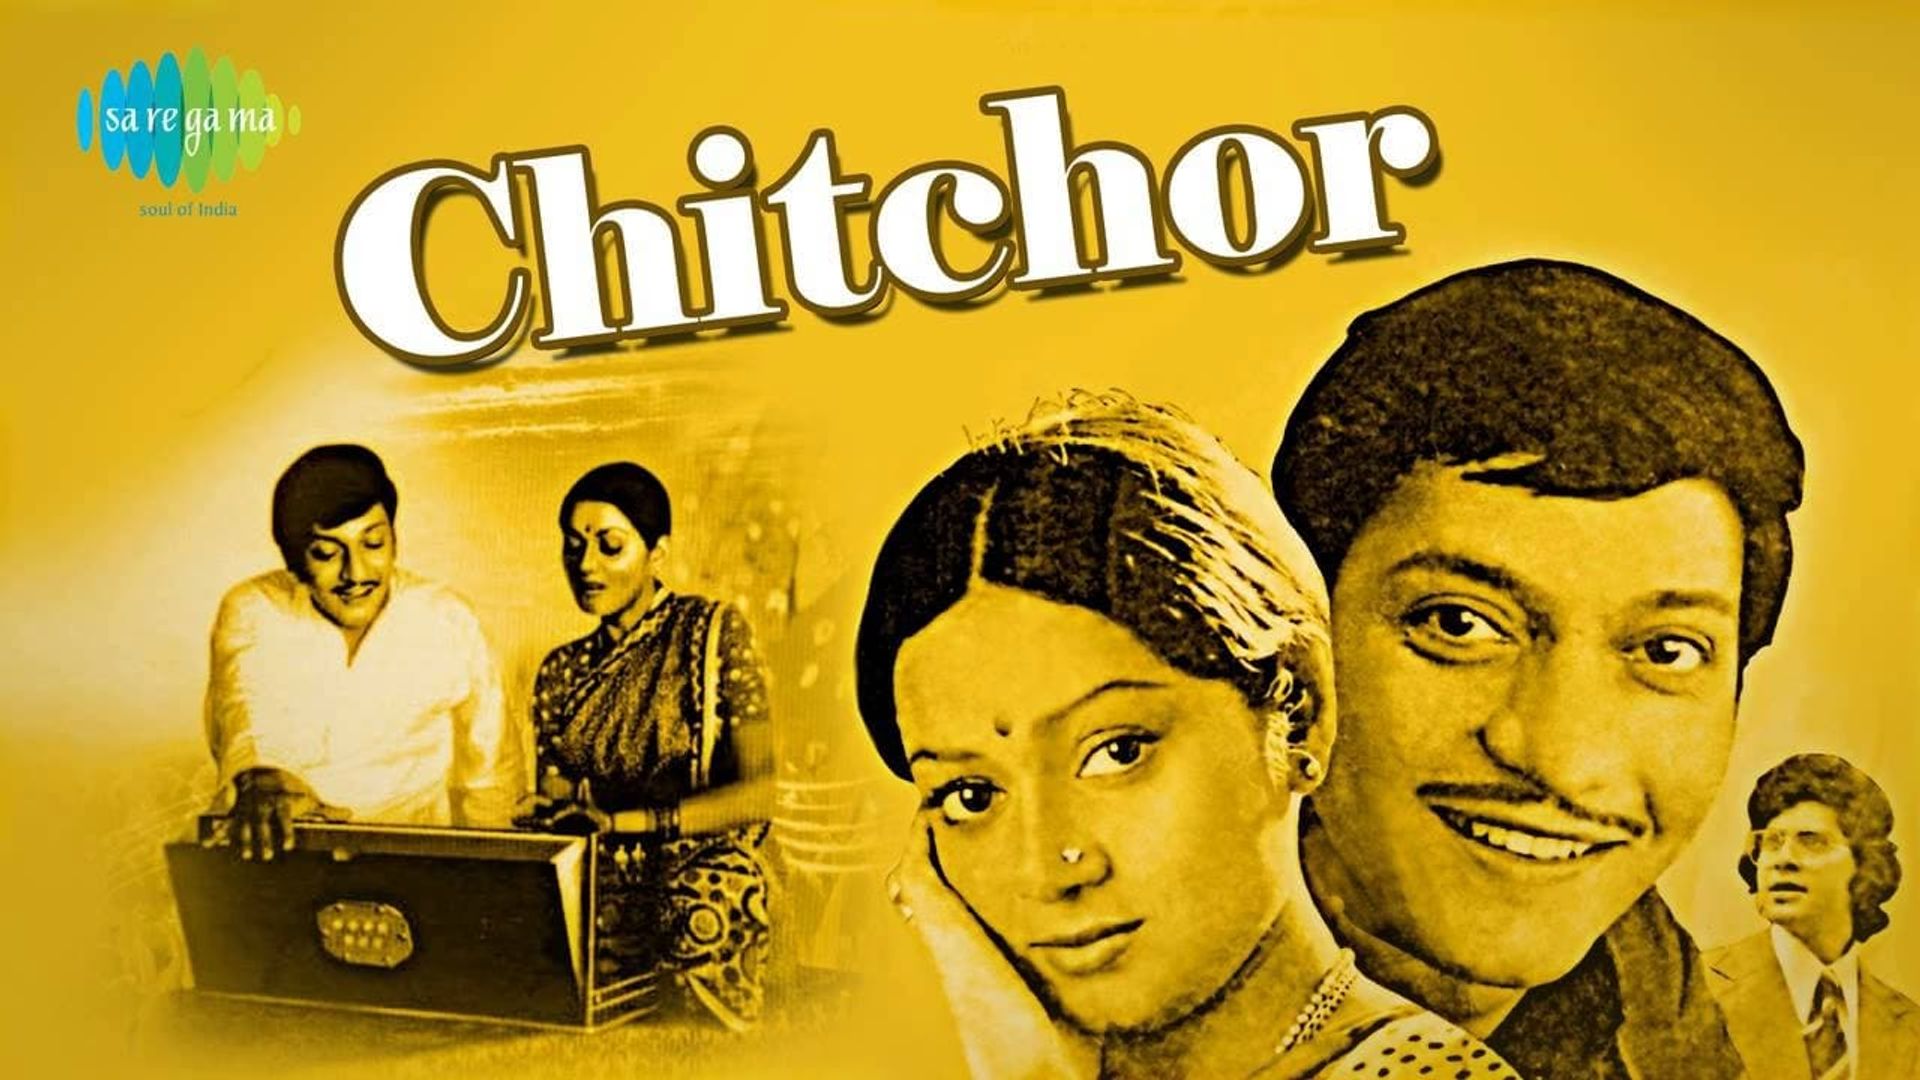 Chitchor background